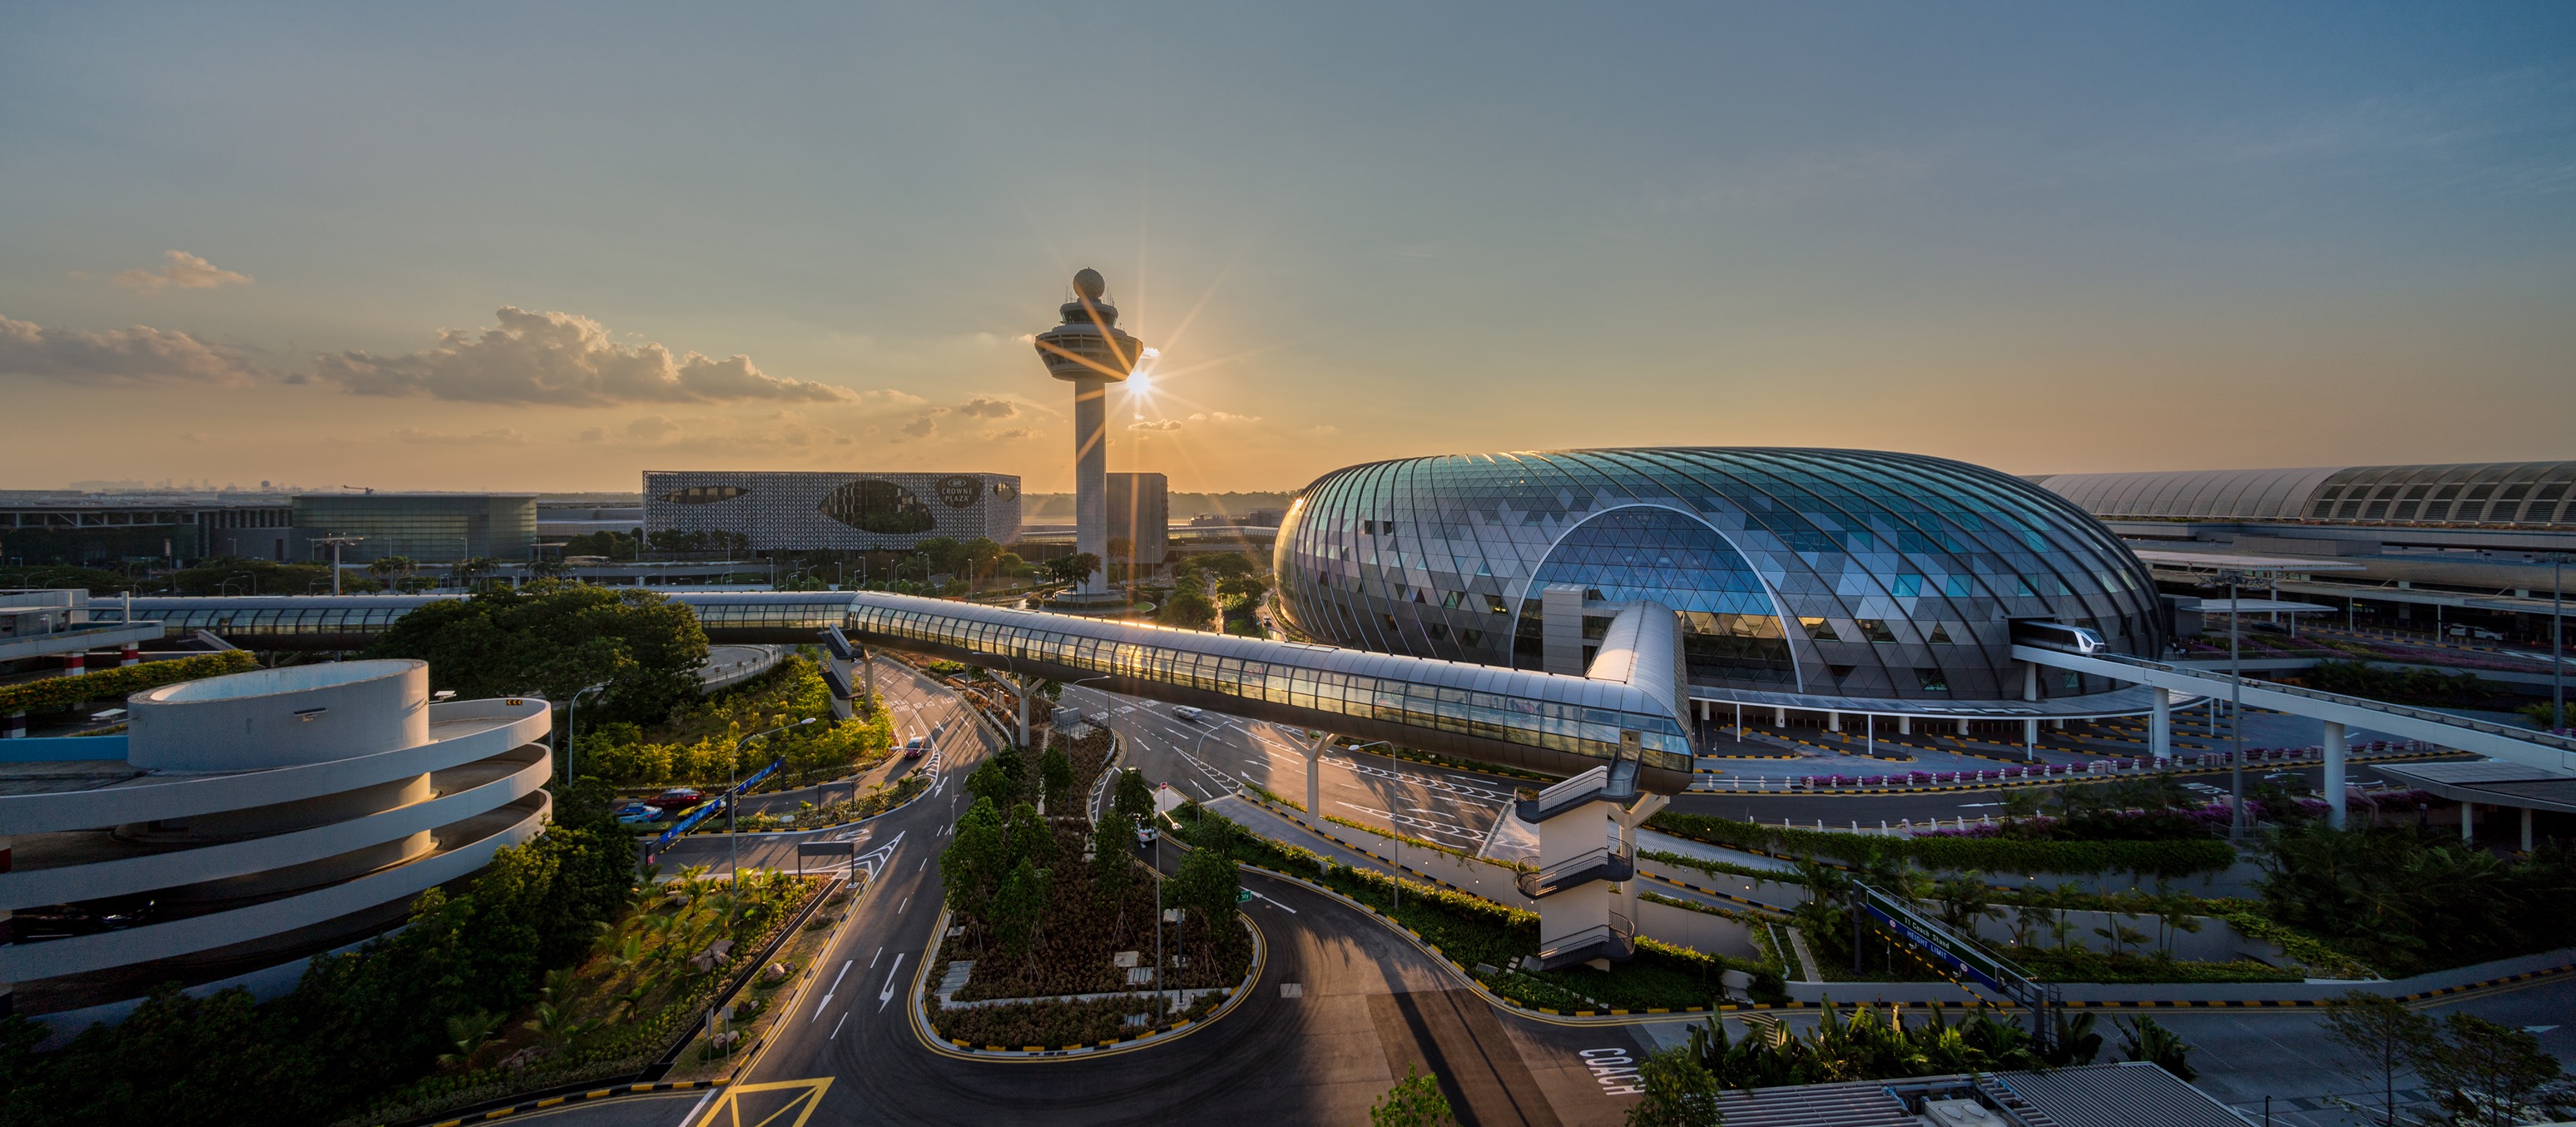 changi airport singapore - 10 things to do